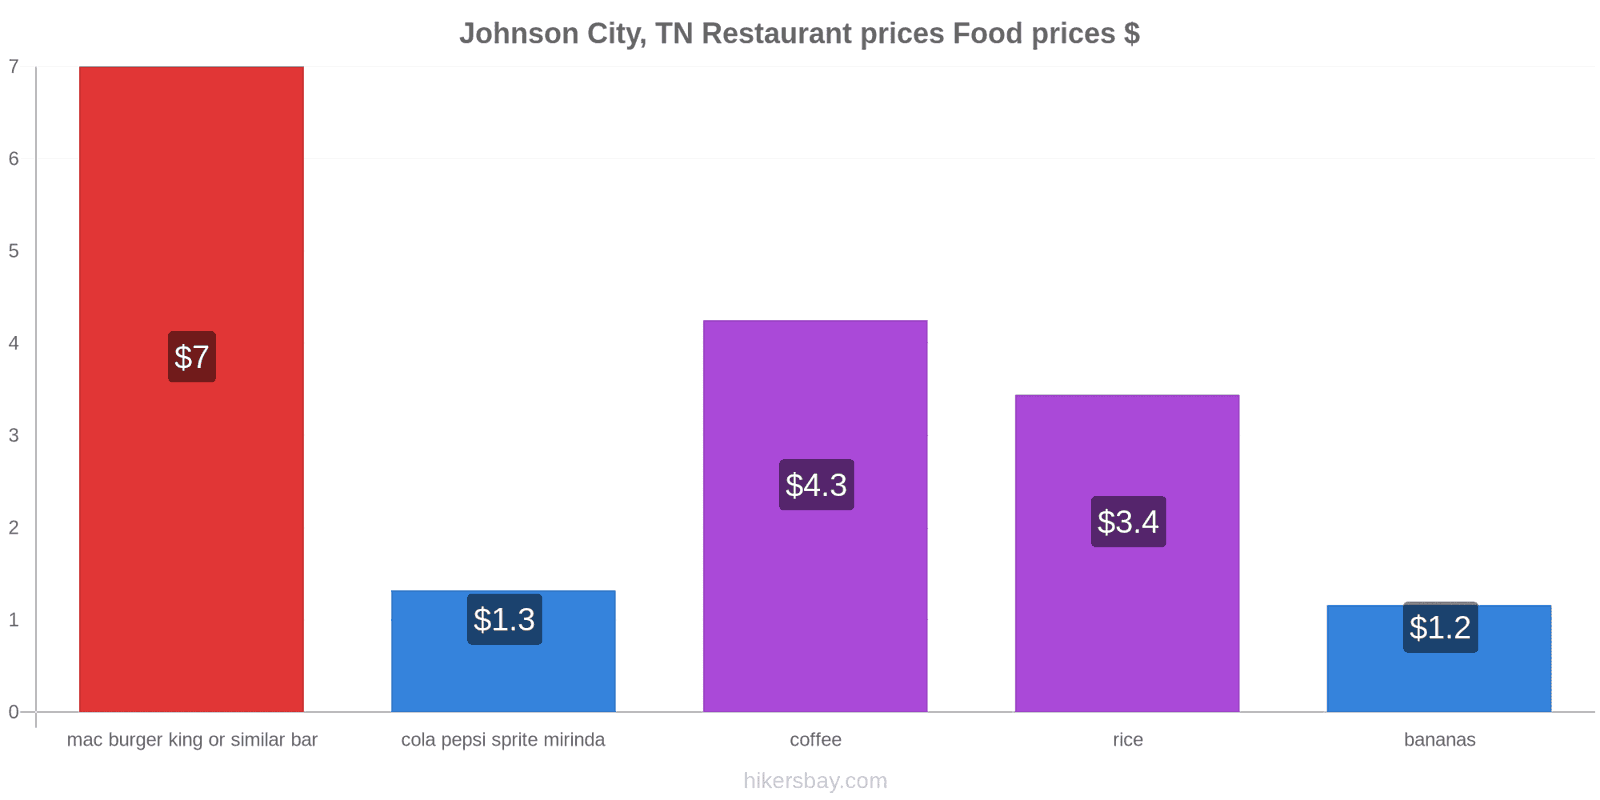 Johnson City, TN price changes hikersbay.com